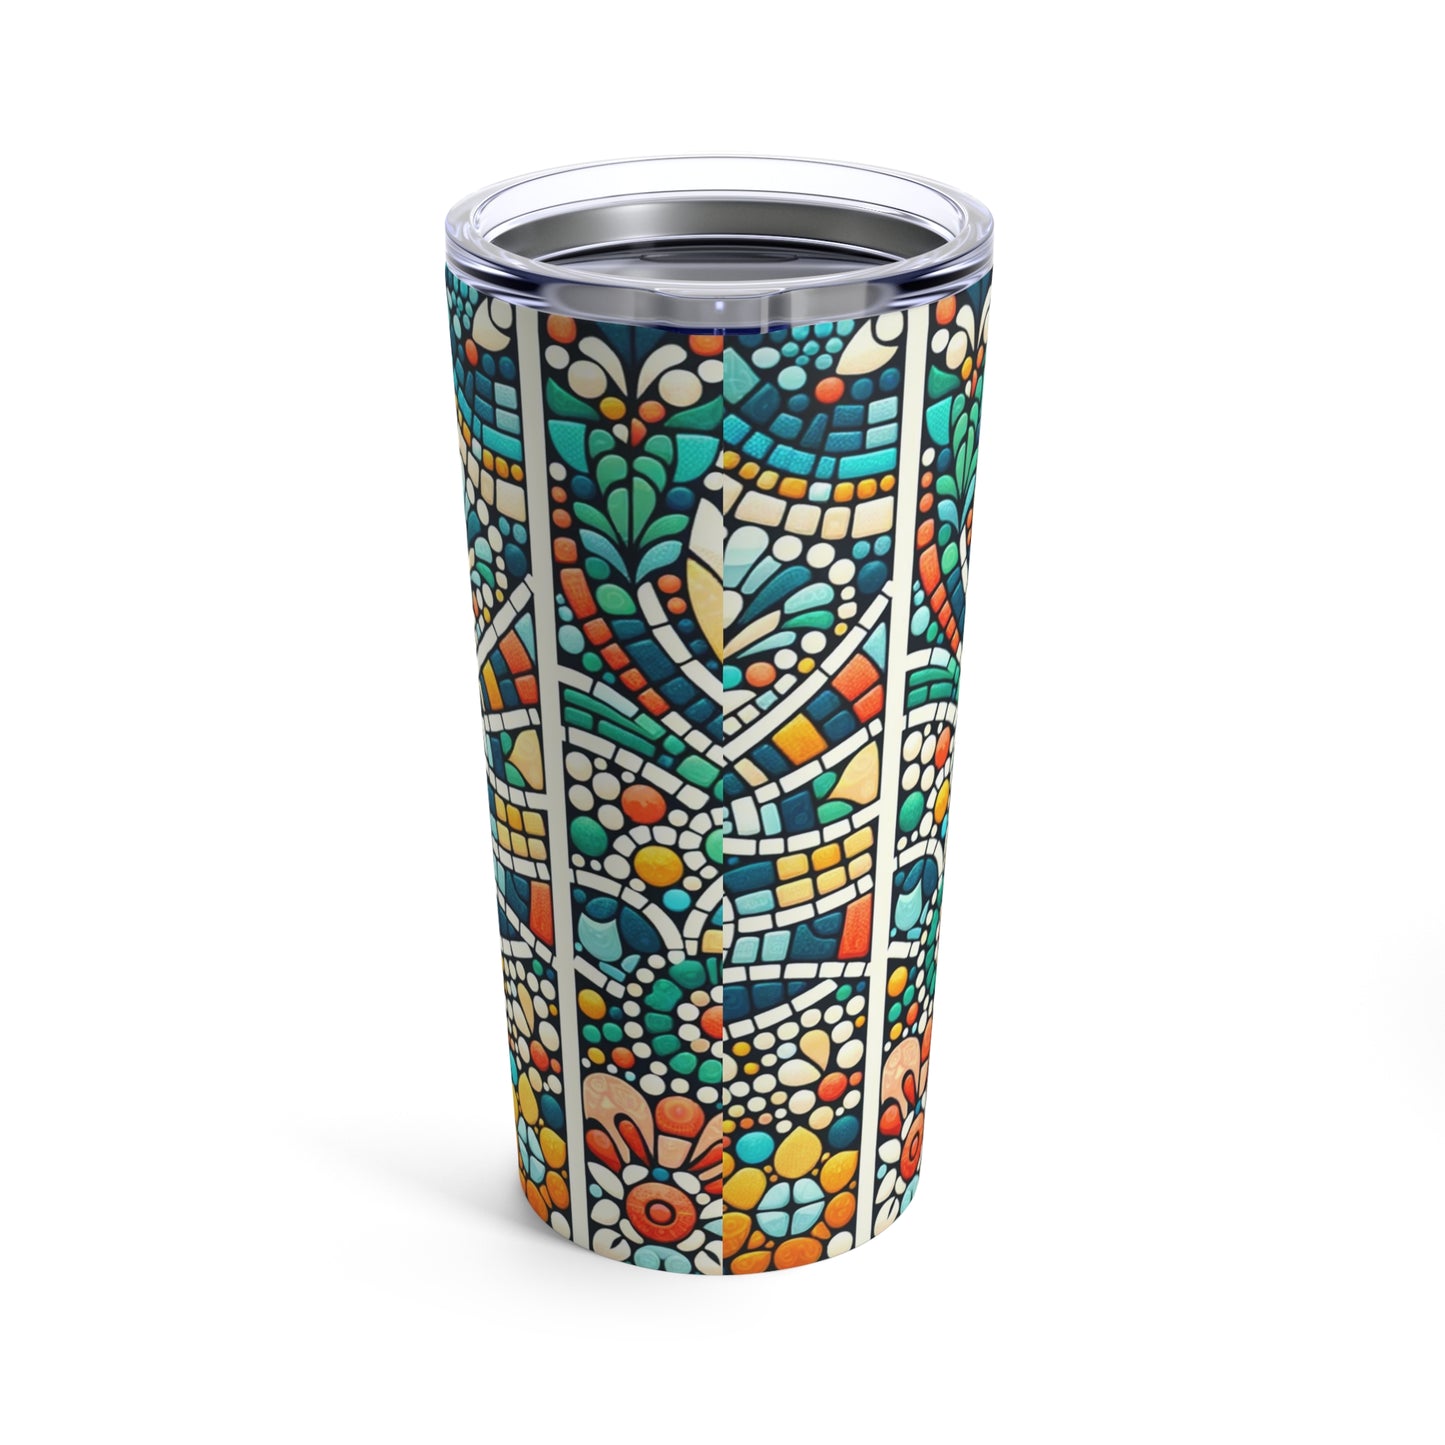 Artistic Mosaic 20oz Tumbler - Colorful Tile Design, Vibrant and Eclectic